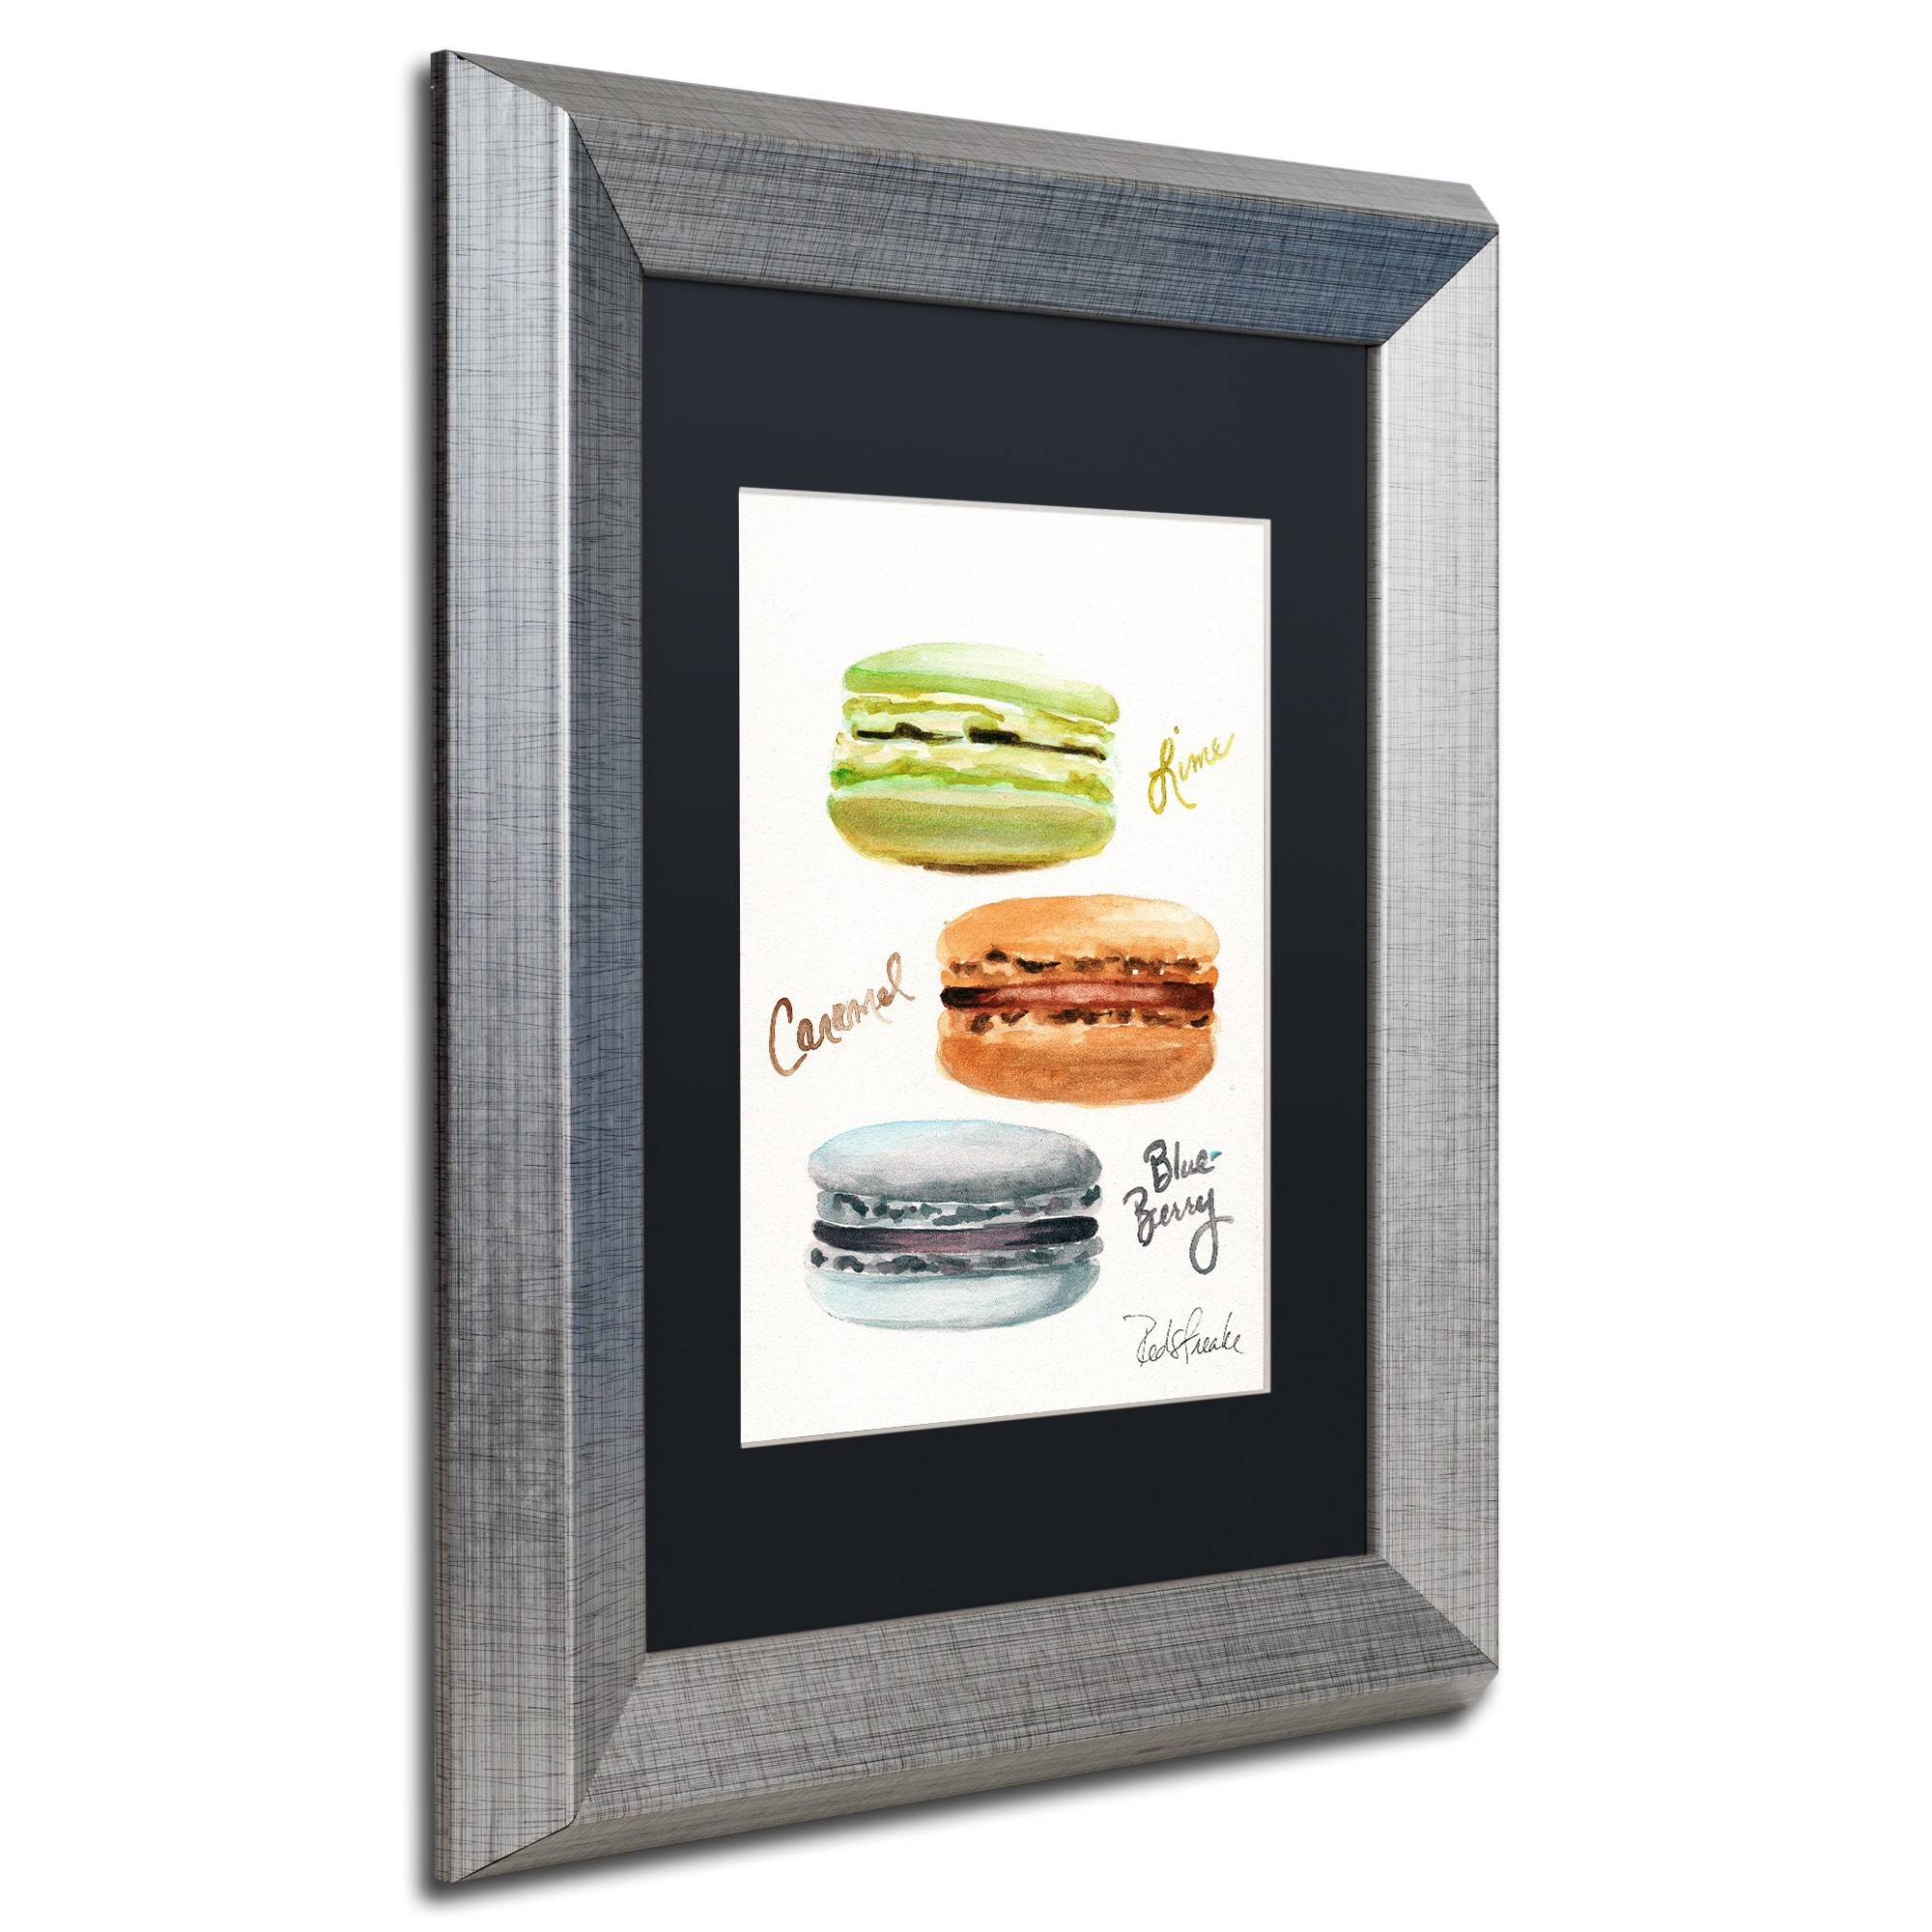 Trademark Fine Art "3 Macarons with Words" Canvas Art by Jennifer Redstreake Black Matte, Silver Frame - image 3 of 3